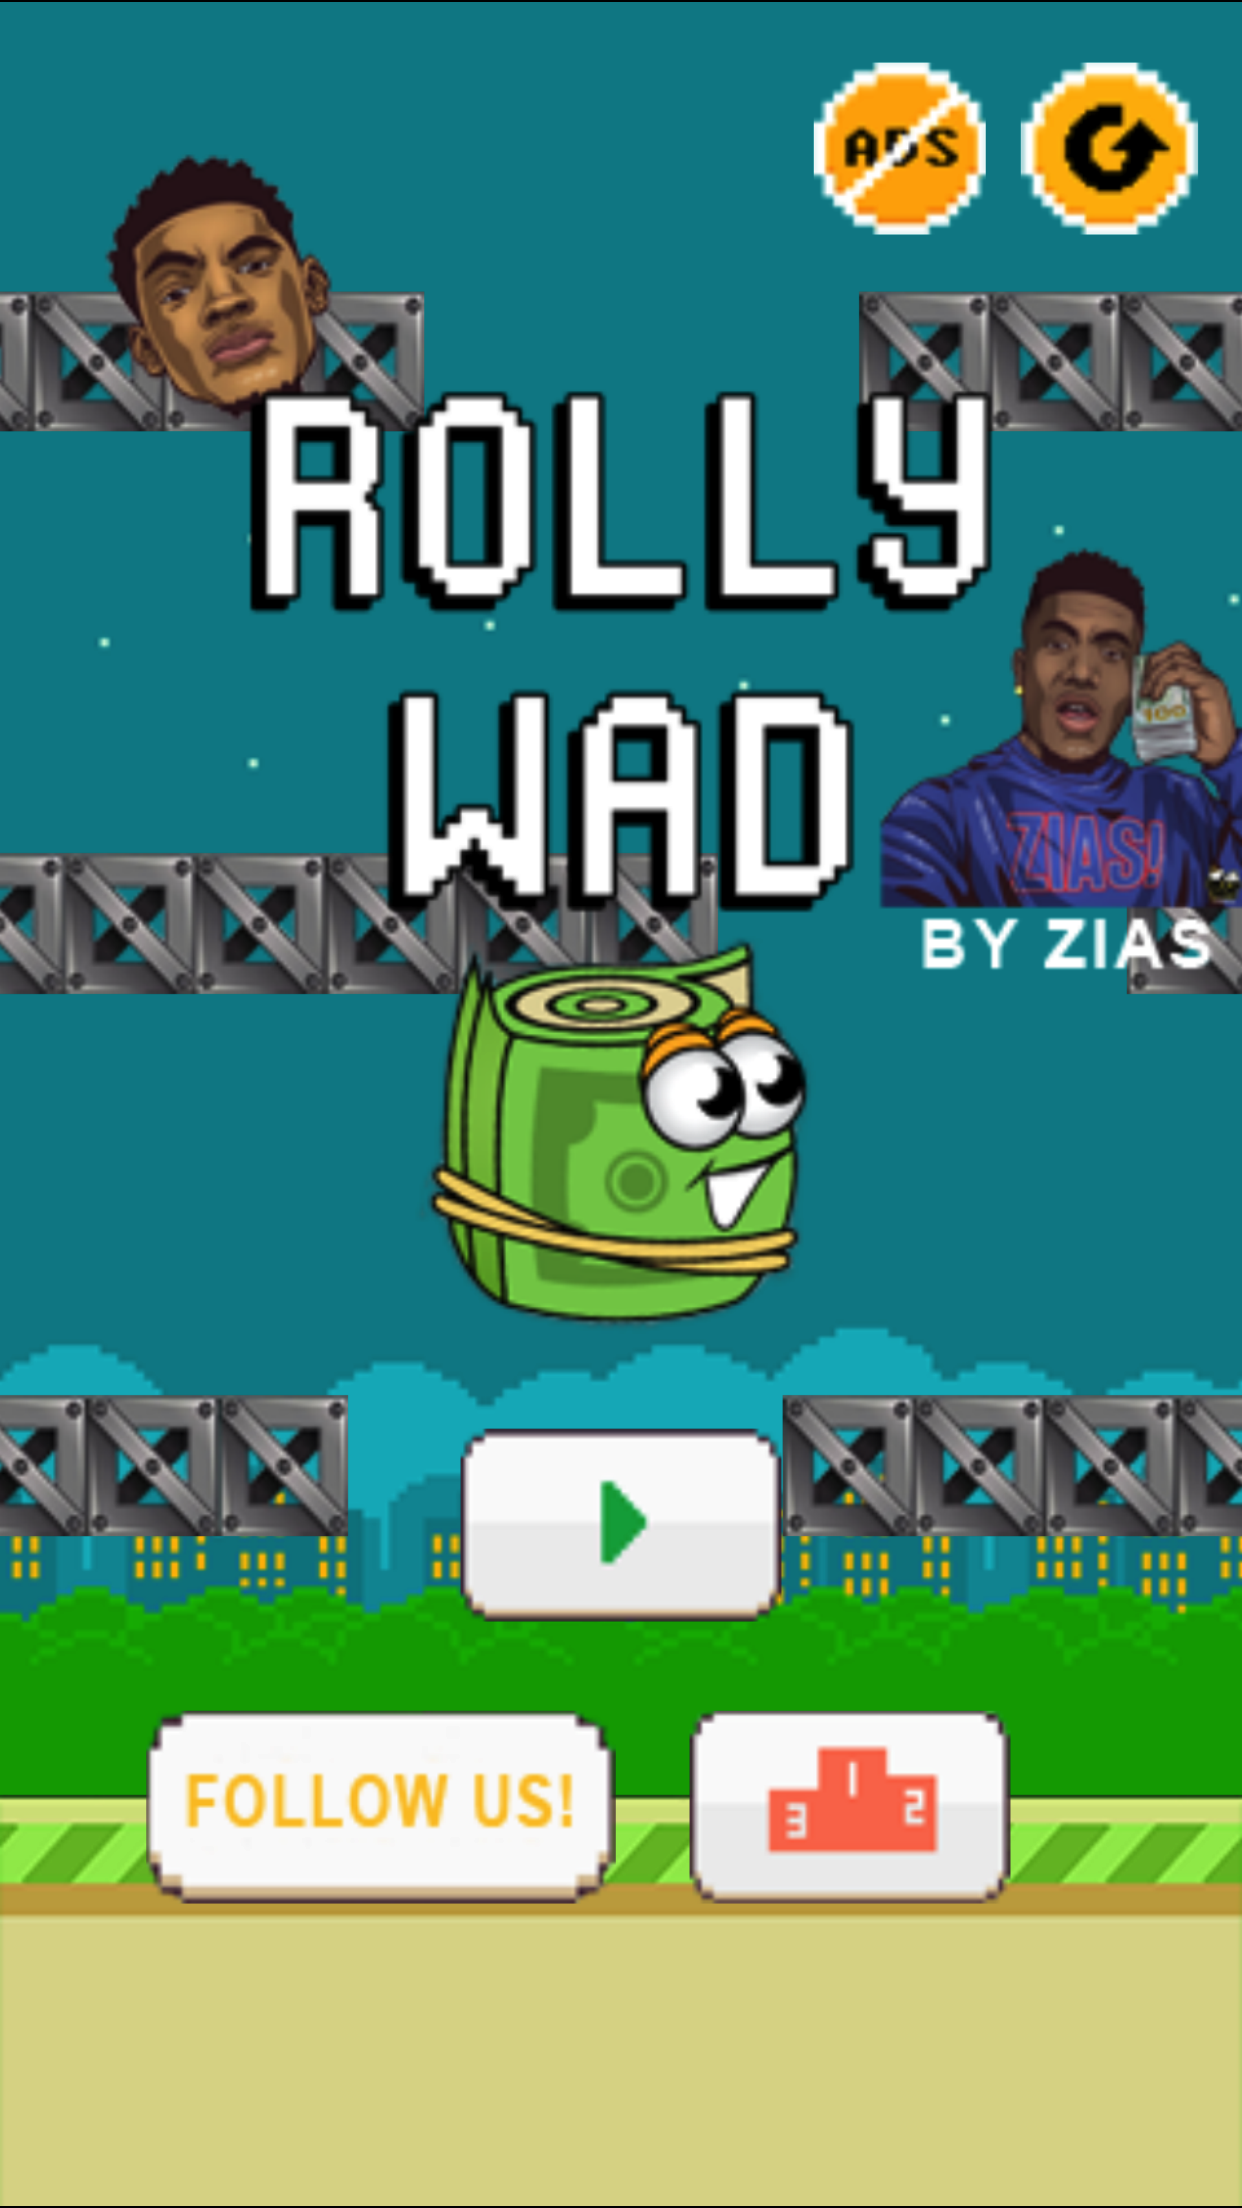 Screenshot 1 of Rolly Wad - Ni ZIAS! 3.0